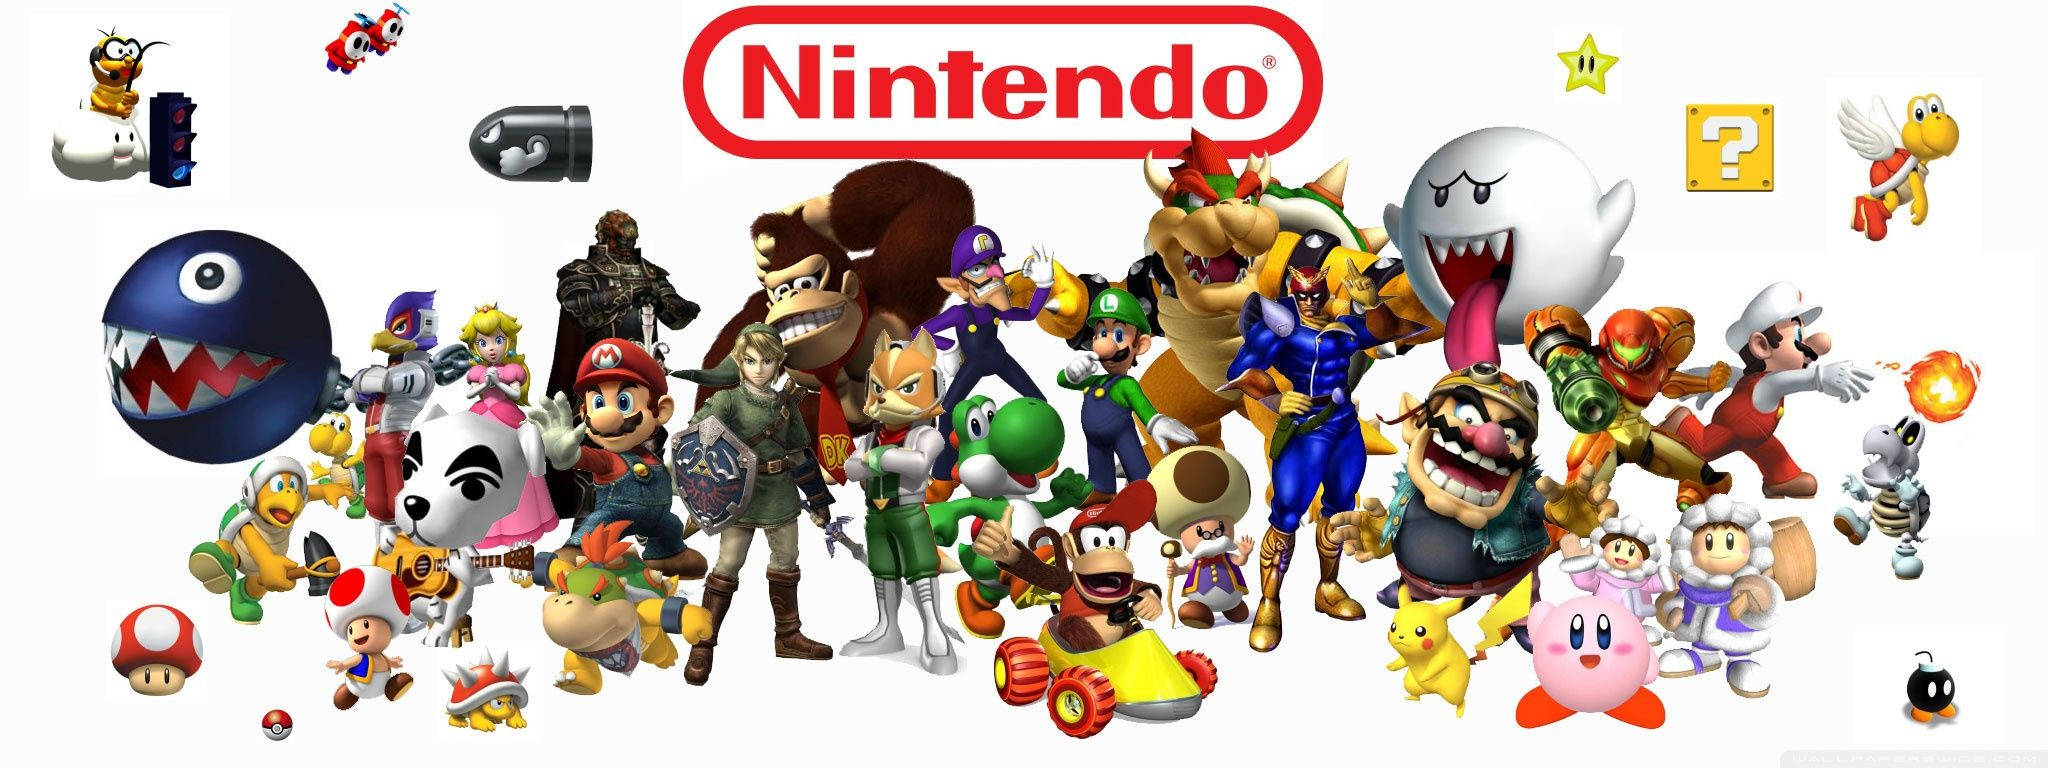 Download Nintendo Game Characters Wallpaper